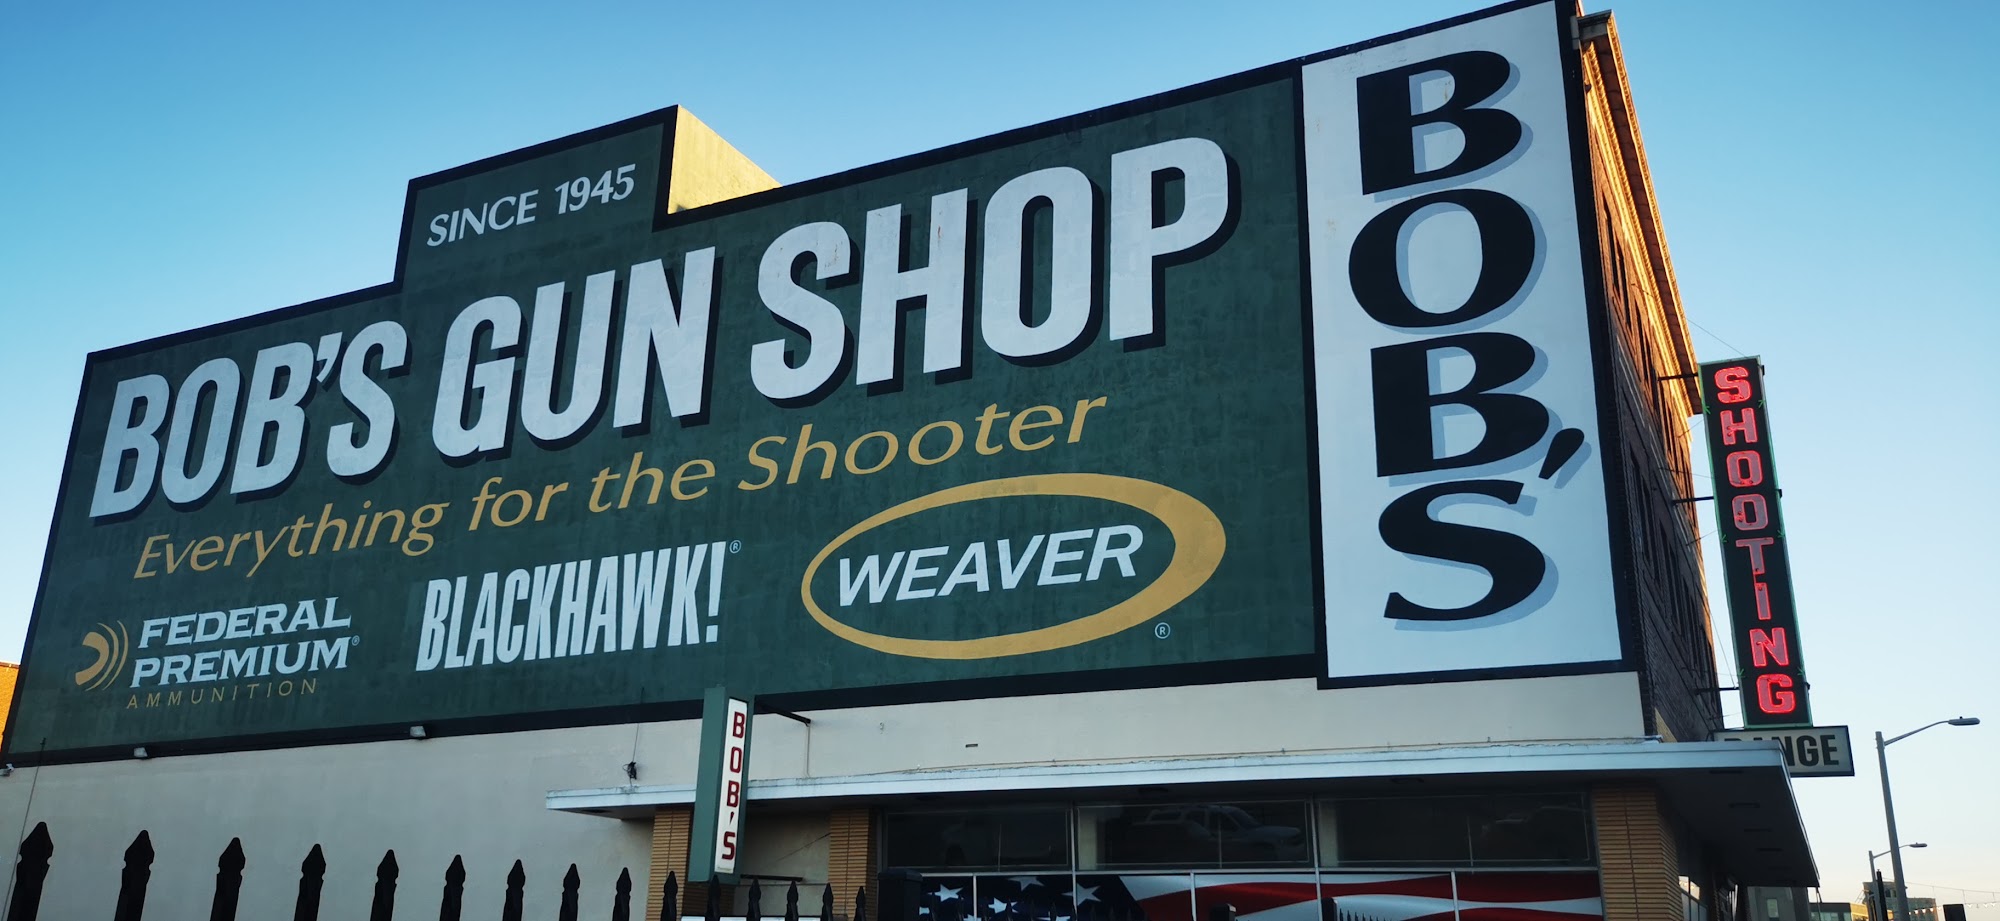 Bob’s Gun Shop